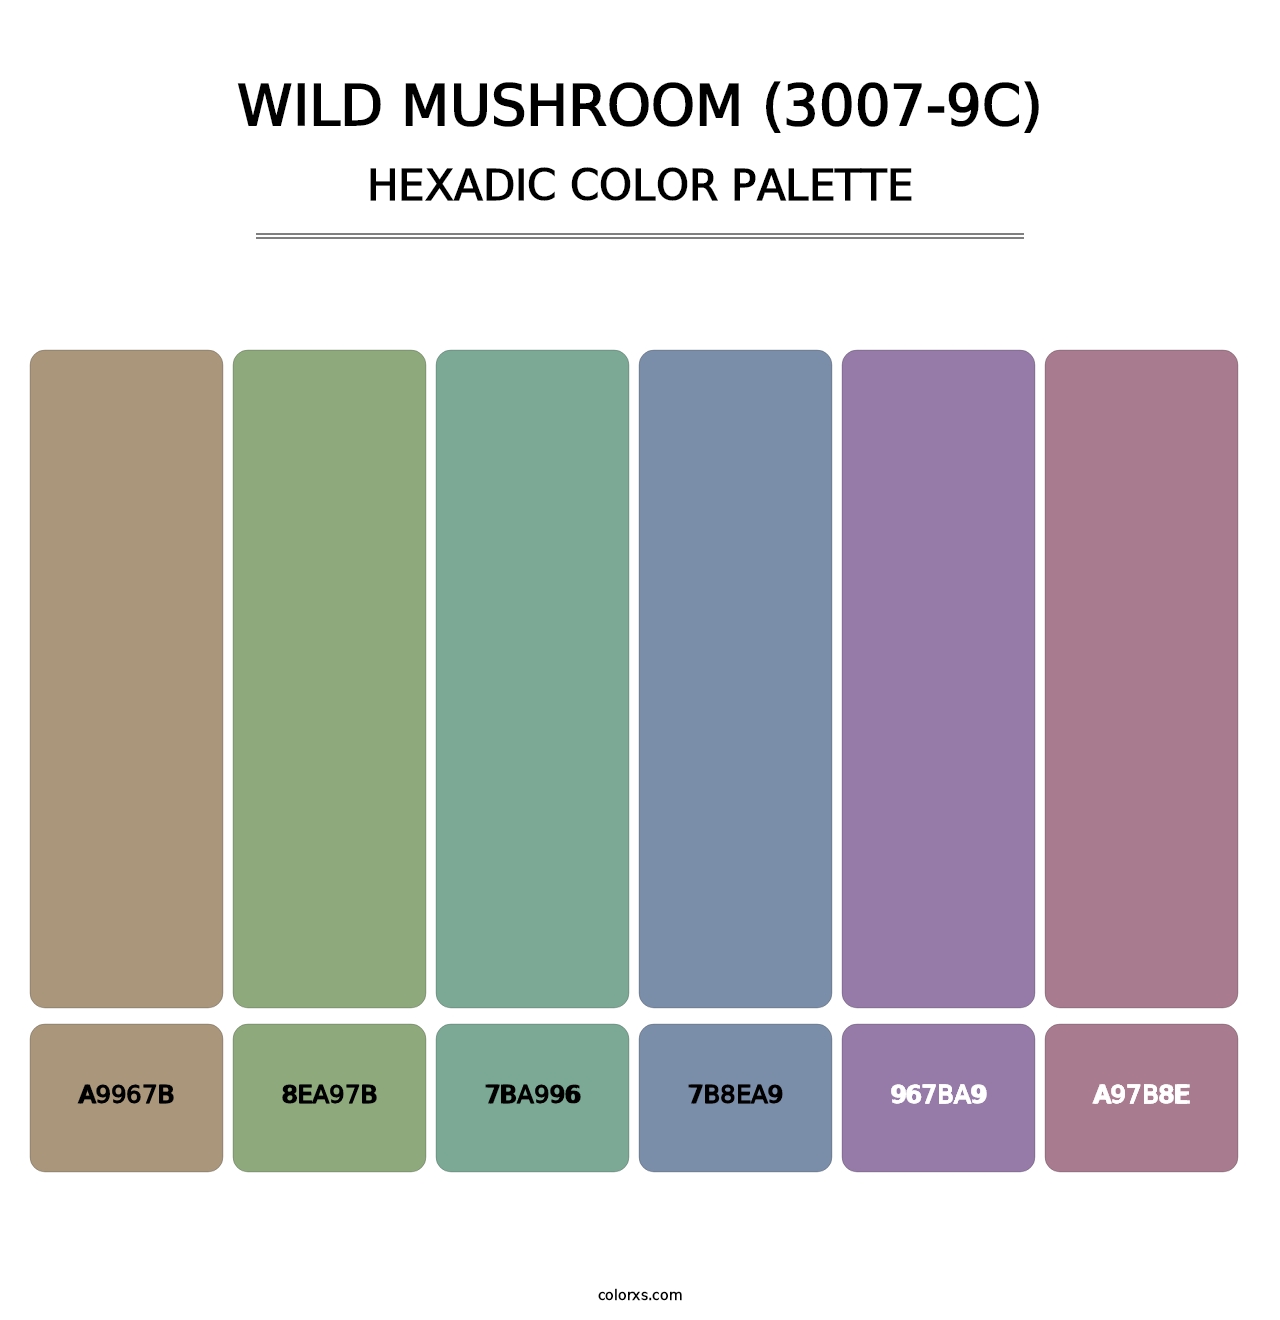 Wild Mushroom (3007-9C) - Hexadic Color Palette